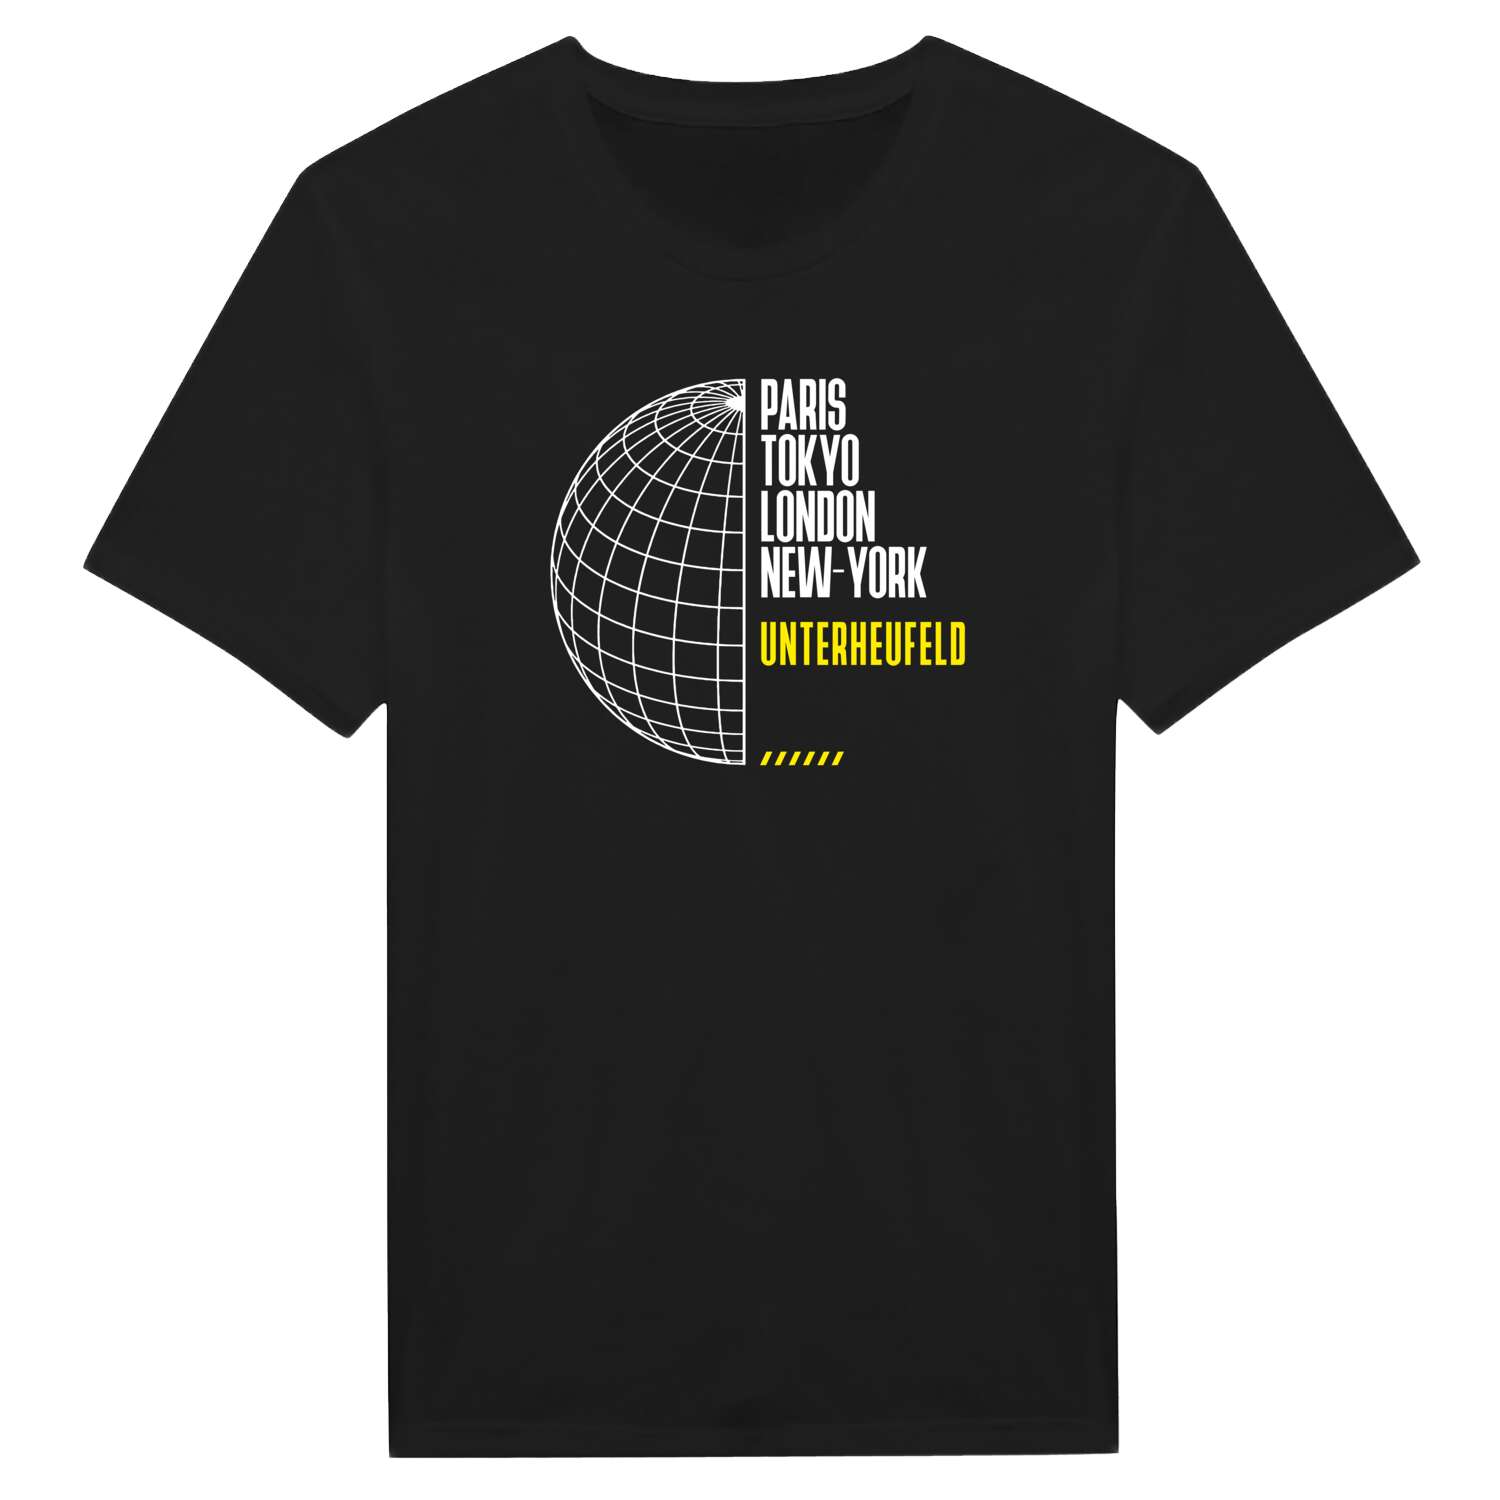 Unterheufeld T-Shirt »Paris Tokyo London«